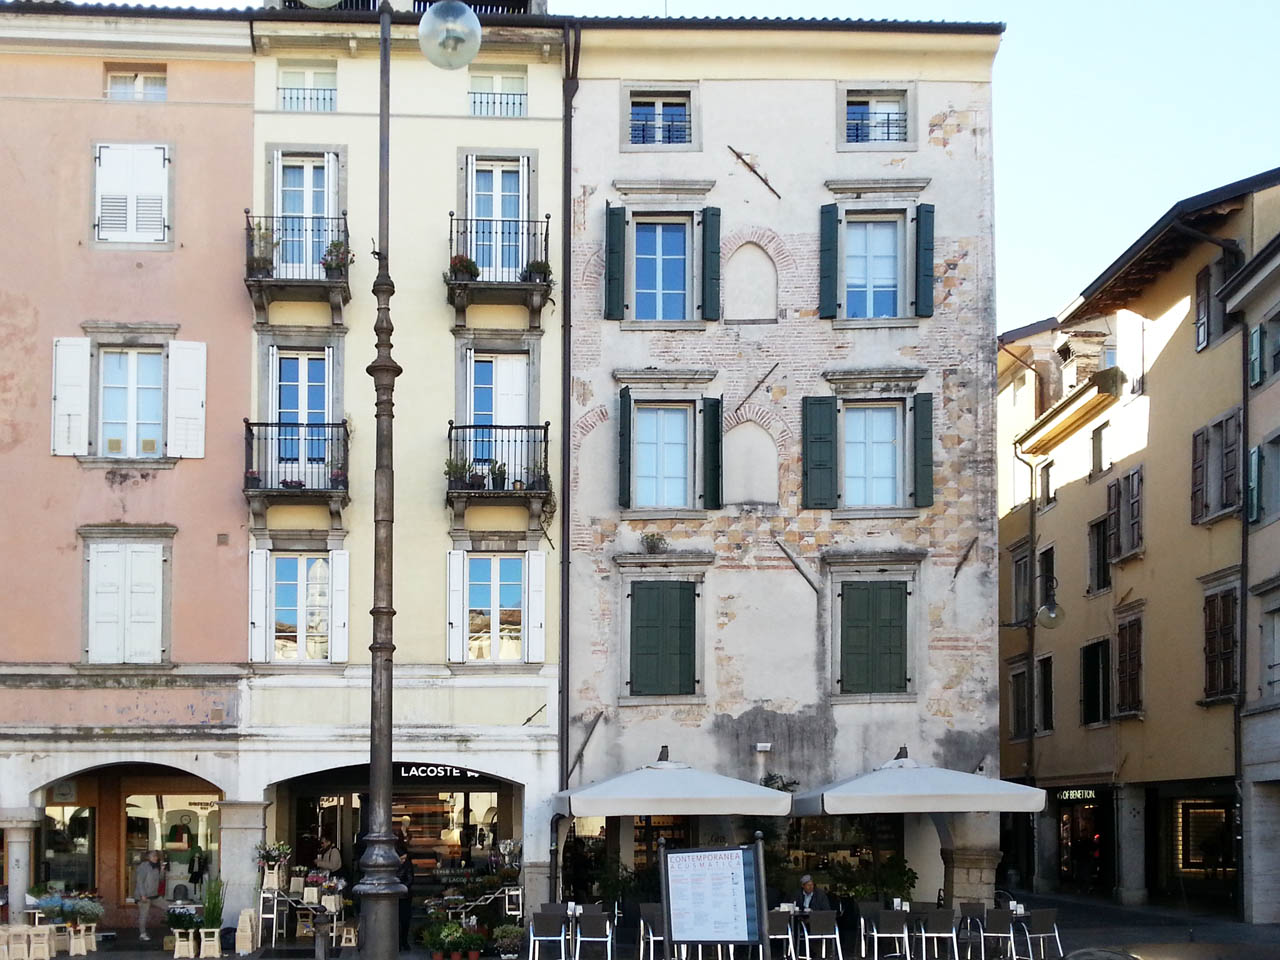 Casa in Piazza Giacomo Matteotti (casa, in linea) - Udine (UD) 